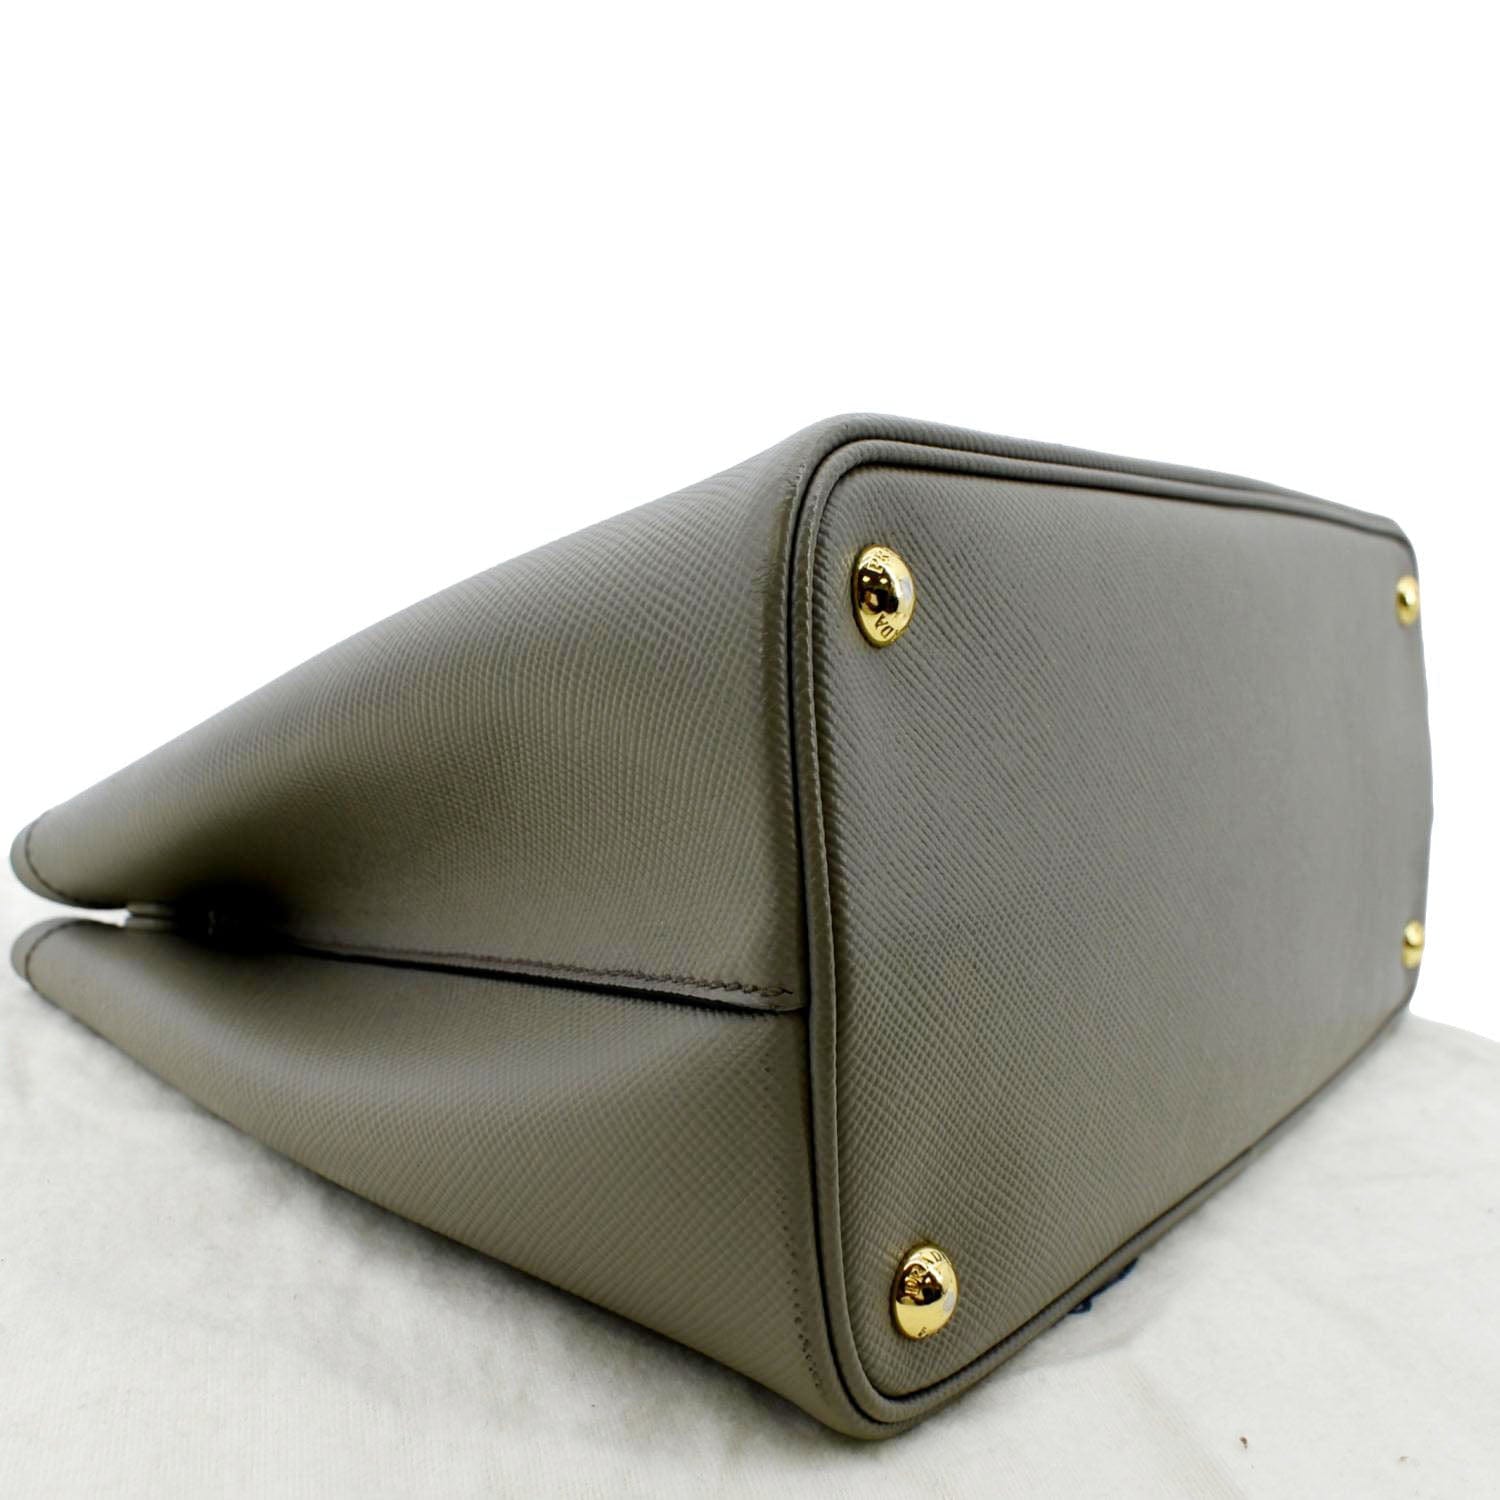 Prada Saffiano Leather Medium Tote Bag